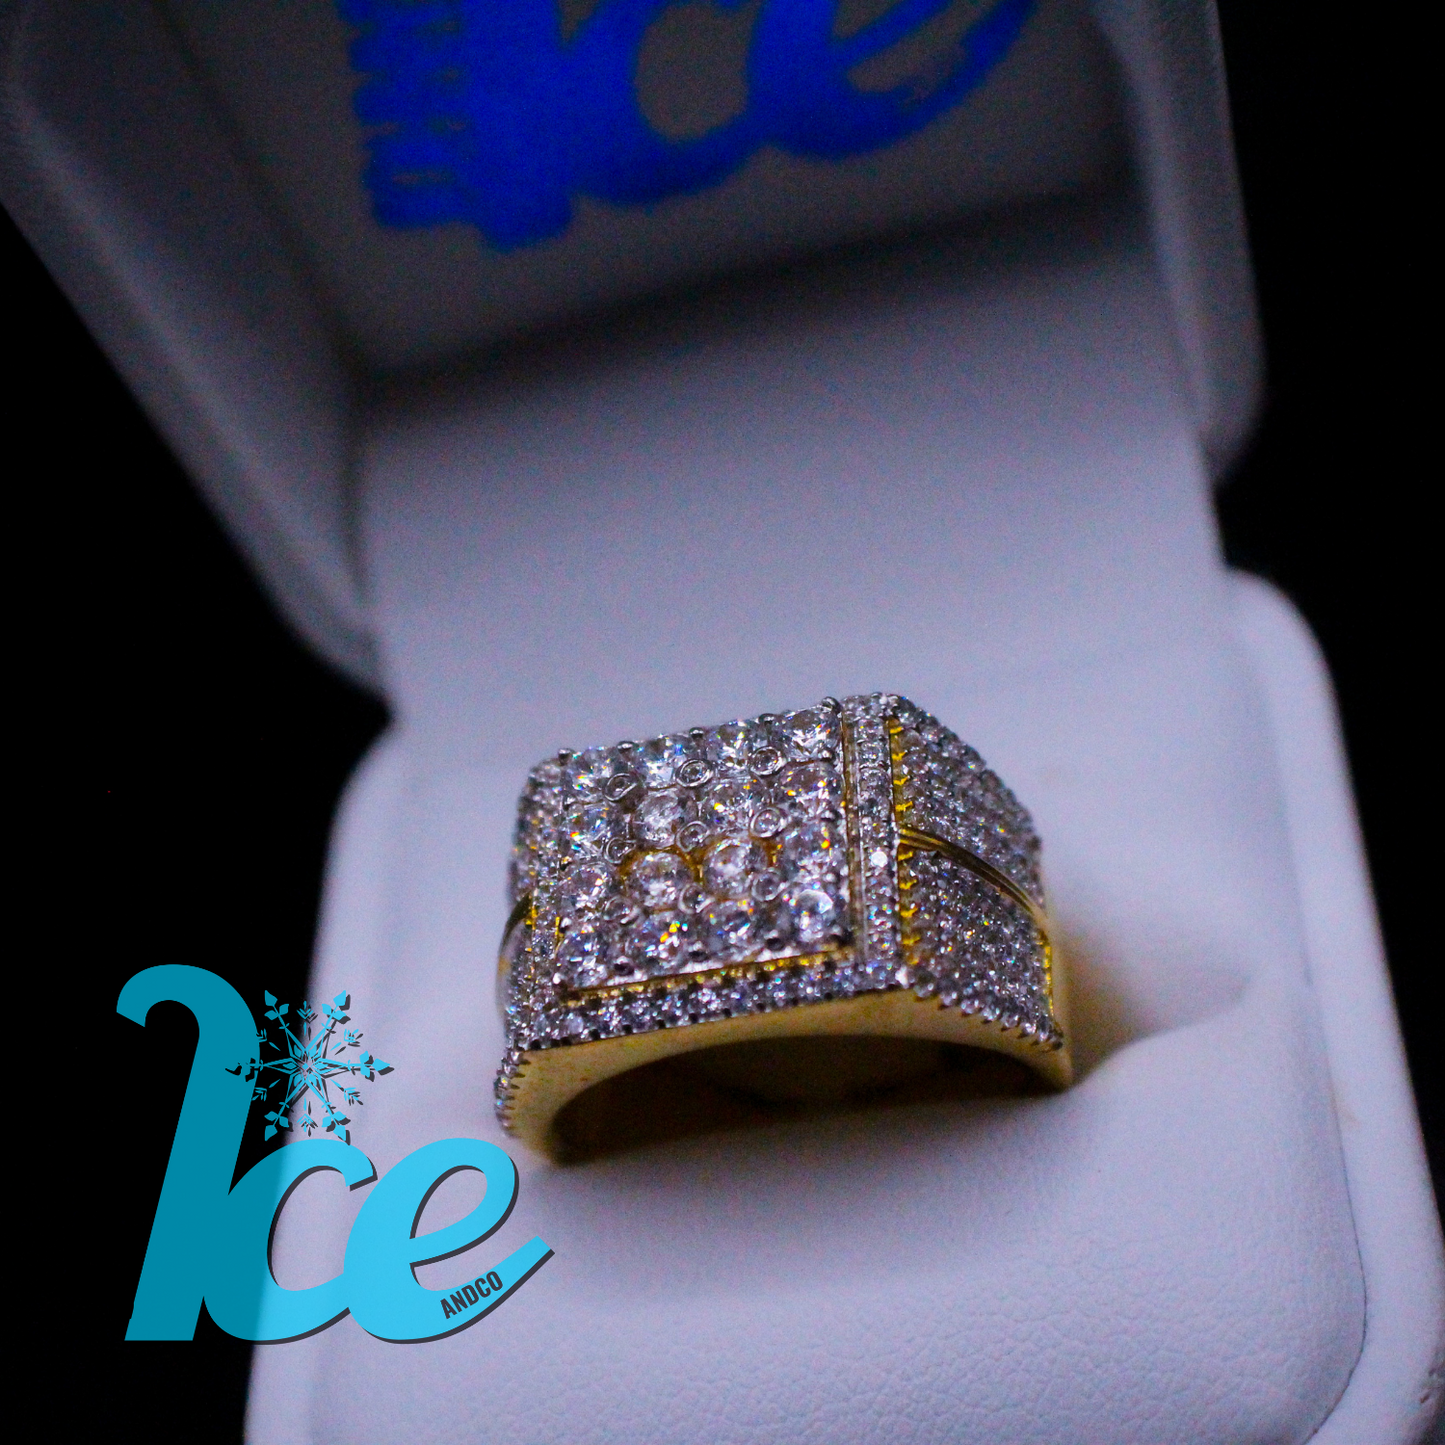 Ice Cube Championship Ring